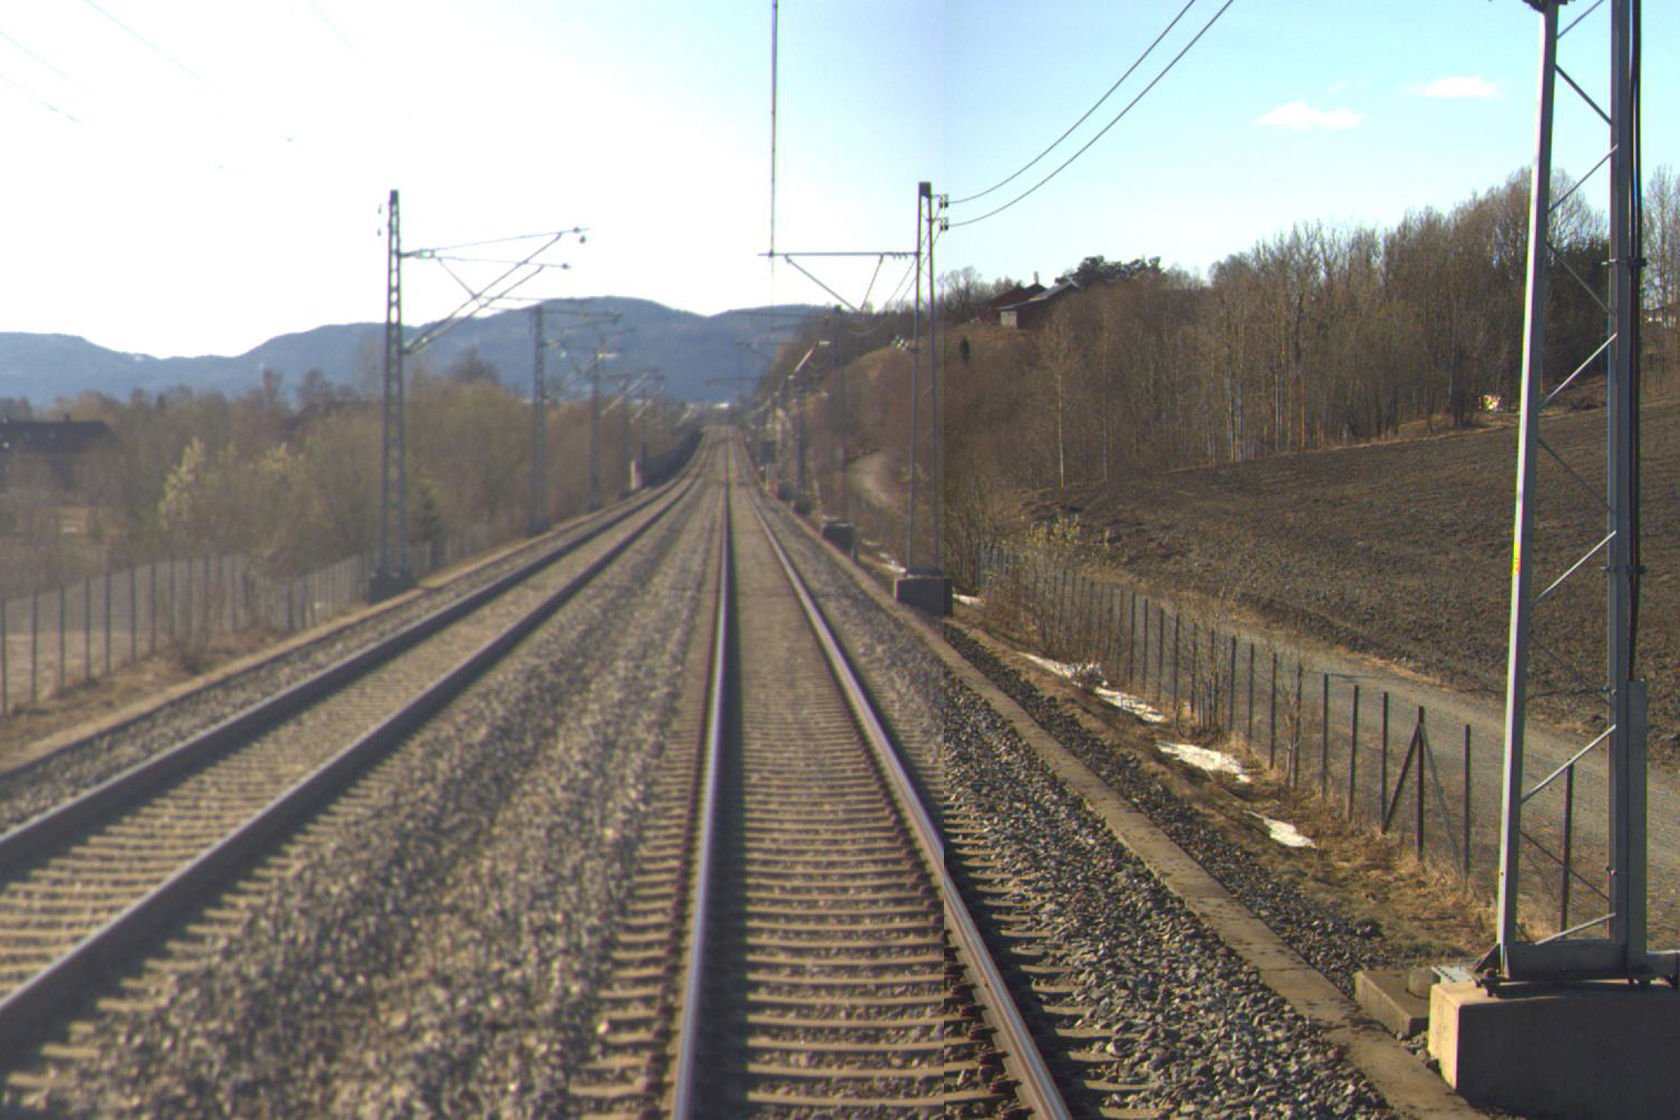 Tracks at Galleberg station